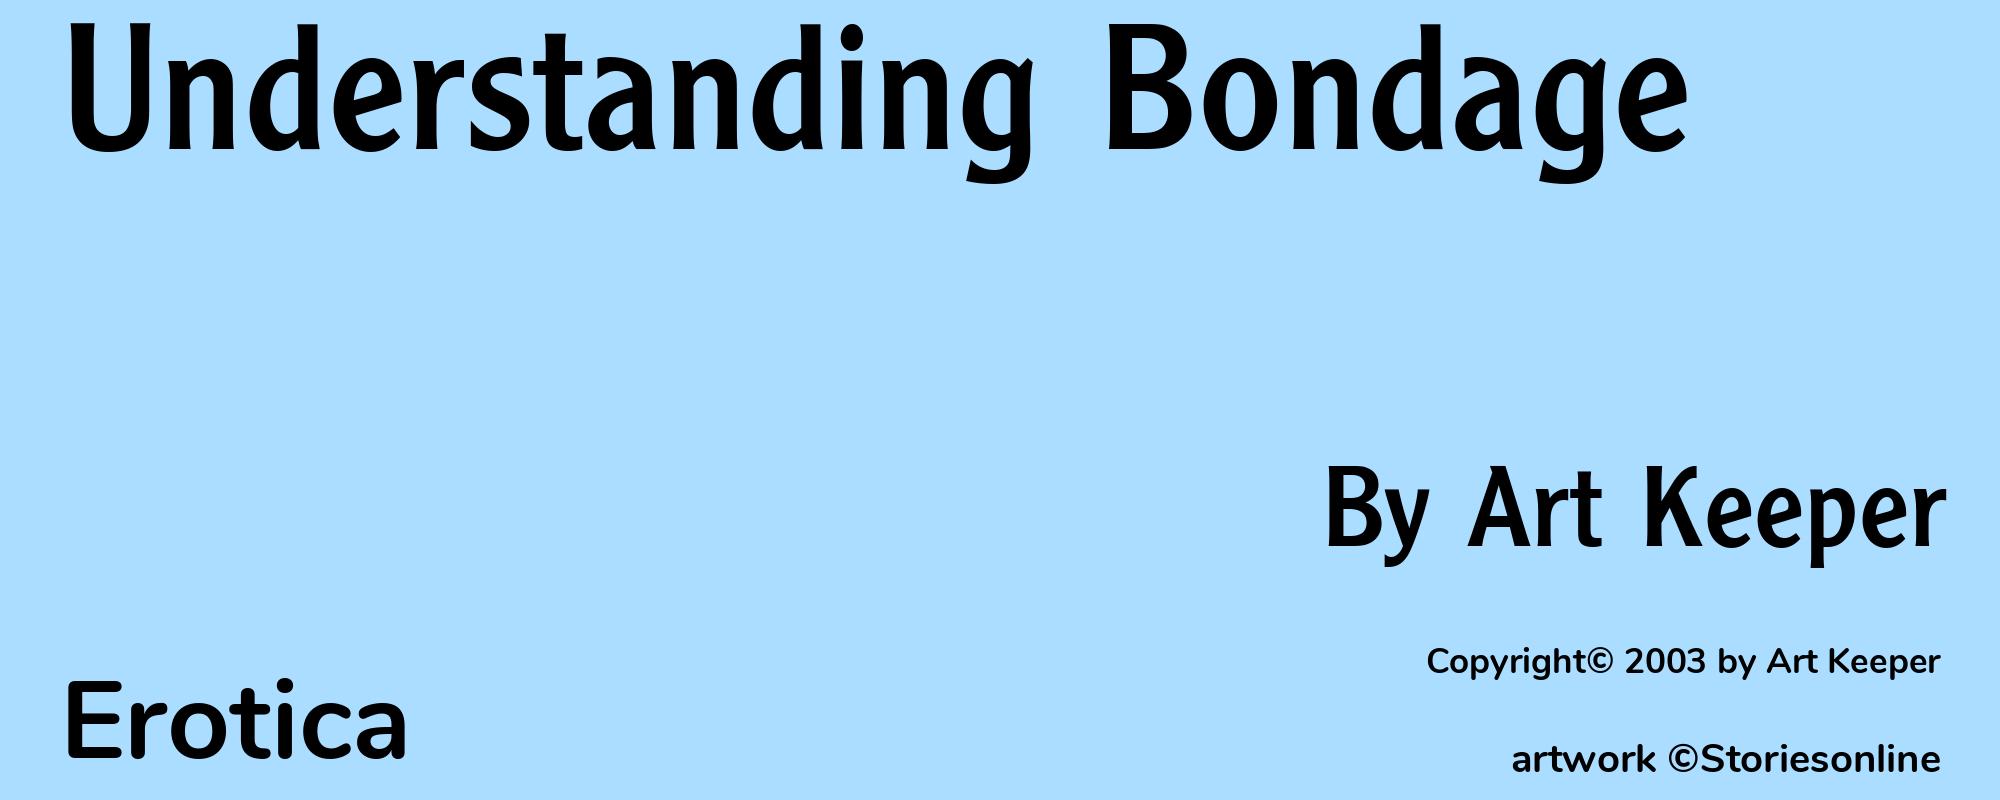 Understanding Bondage - Cover